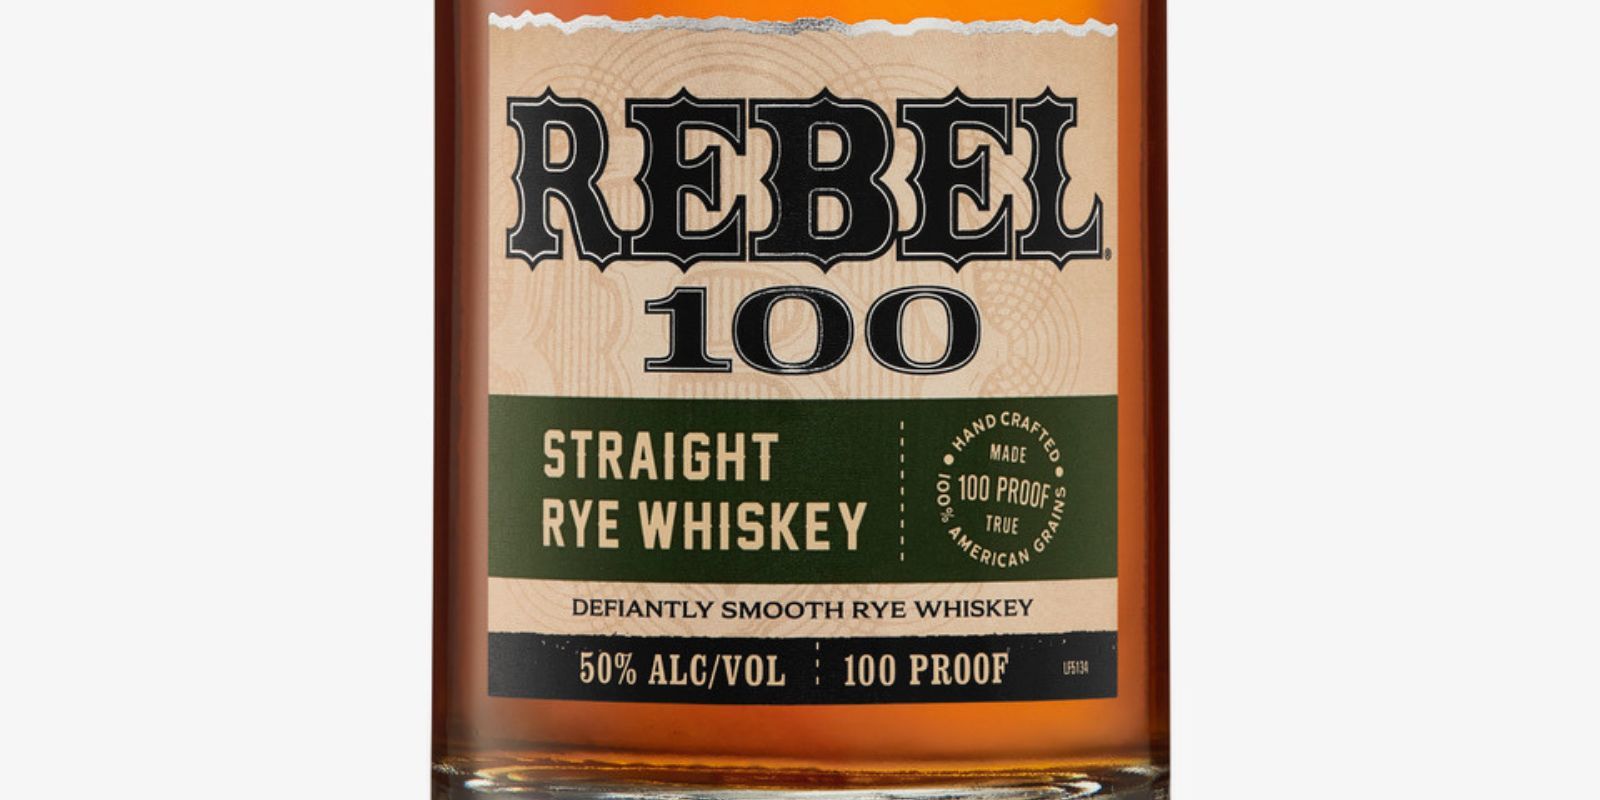 Lux Row Distillers introduces Rebel 100 Rye